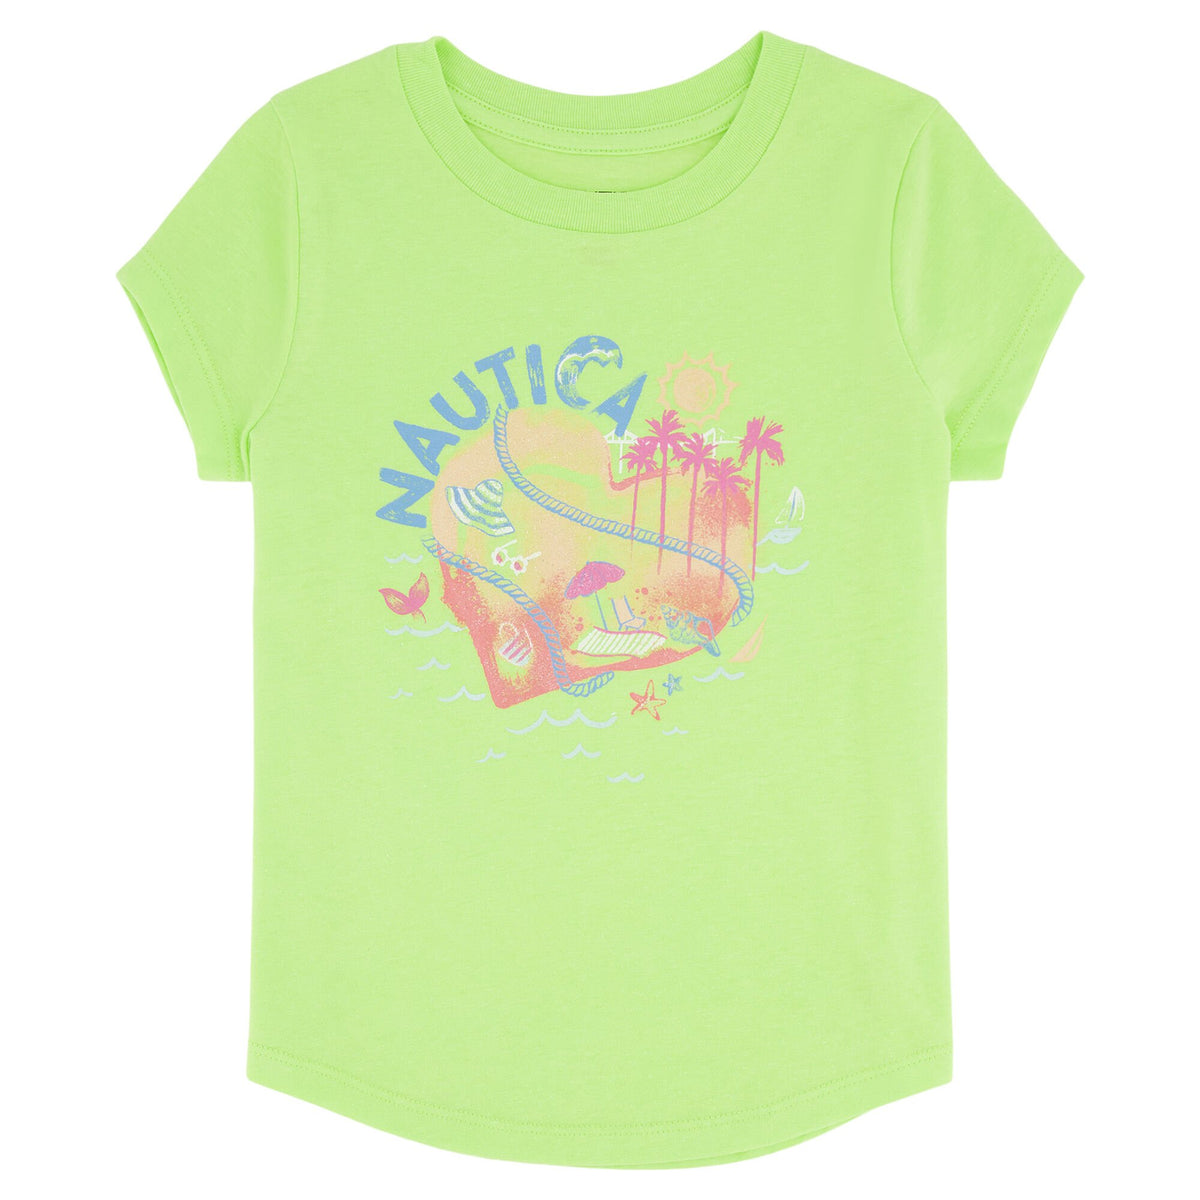 Nautica Girls' Nautica Island T-Shirt (8-16) Biscay Teal